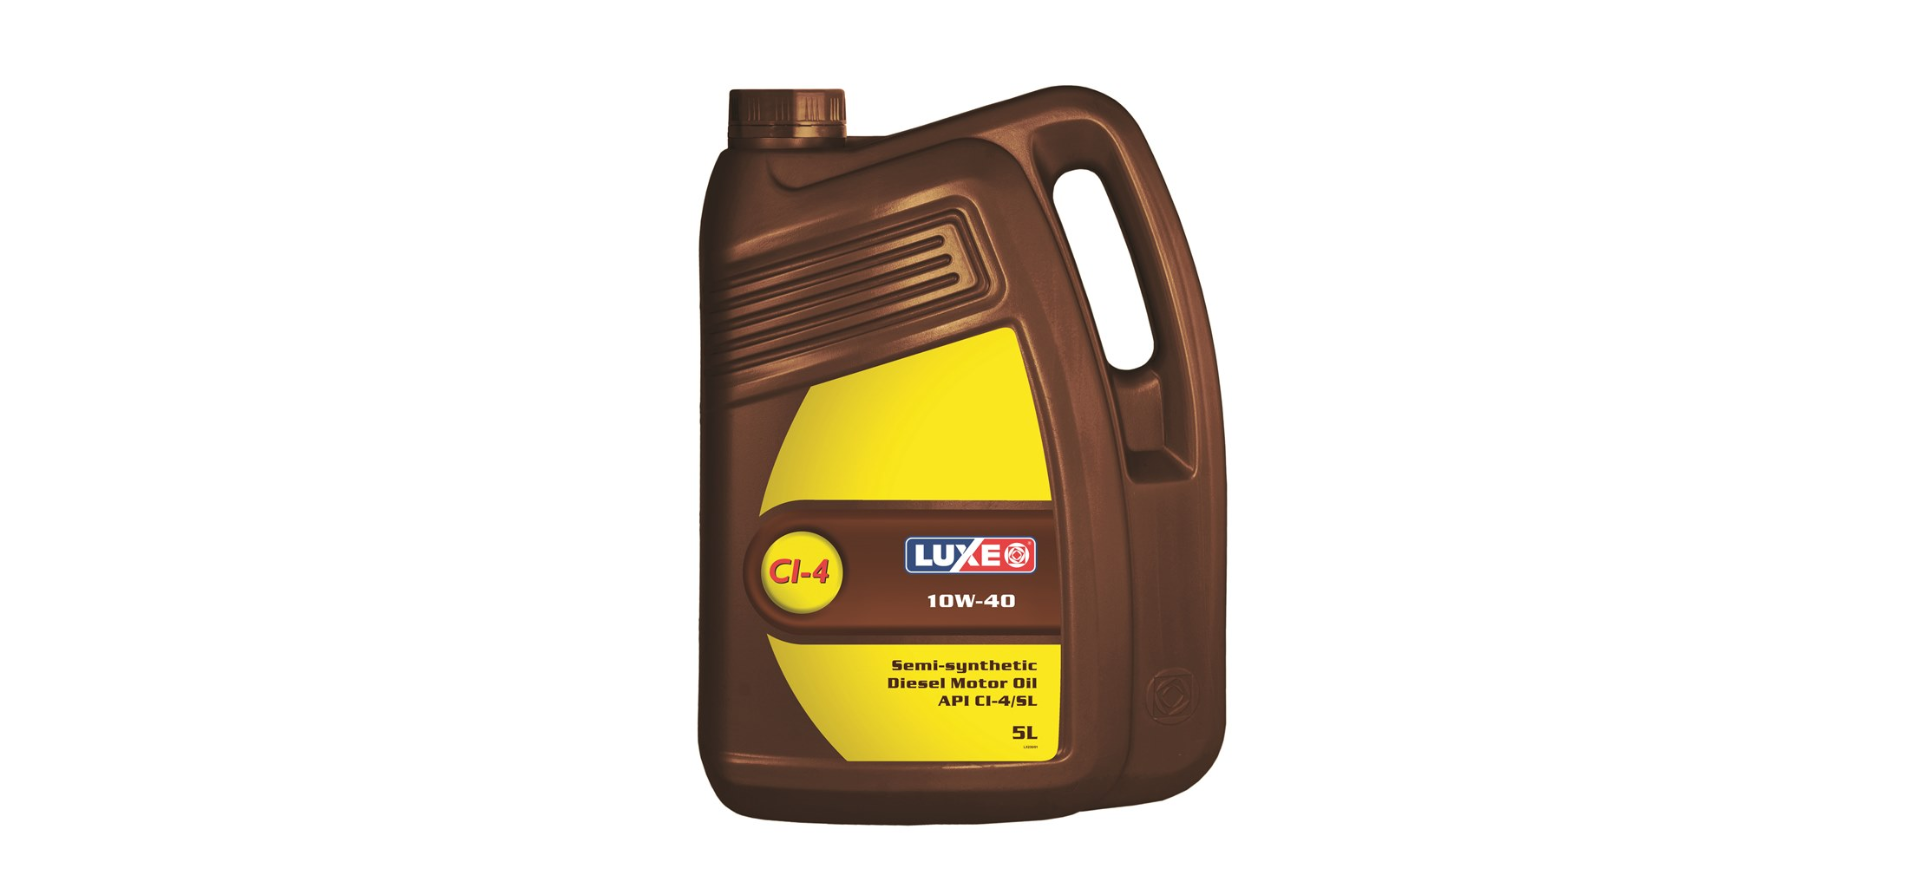 Luxе масло дизельное Diesel 10w40 ci-4/SL П/С 5л. Luxe Diesel Master Oil 5w30. Масло LUXOIL Diezel 10w40 CG-4 5л х4. Luxe 30371 масло моторное синтетическое Luxe x-pert 5w-40 SN+ 4l 4л.